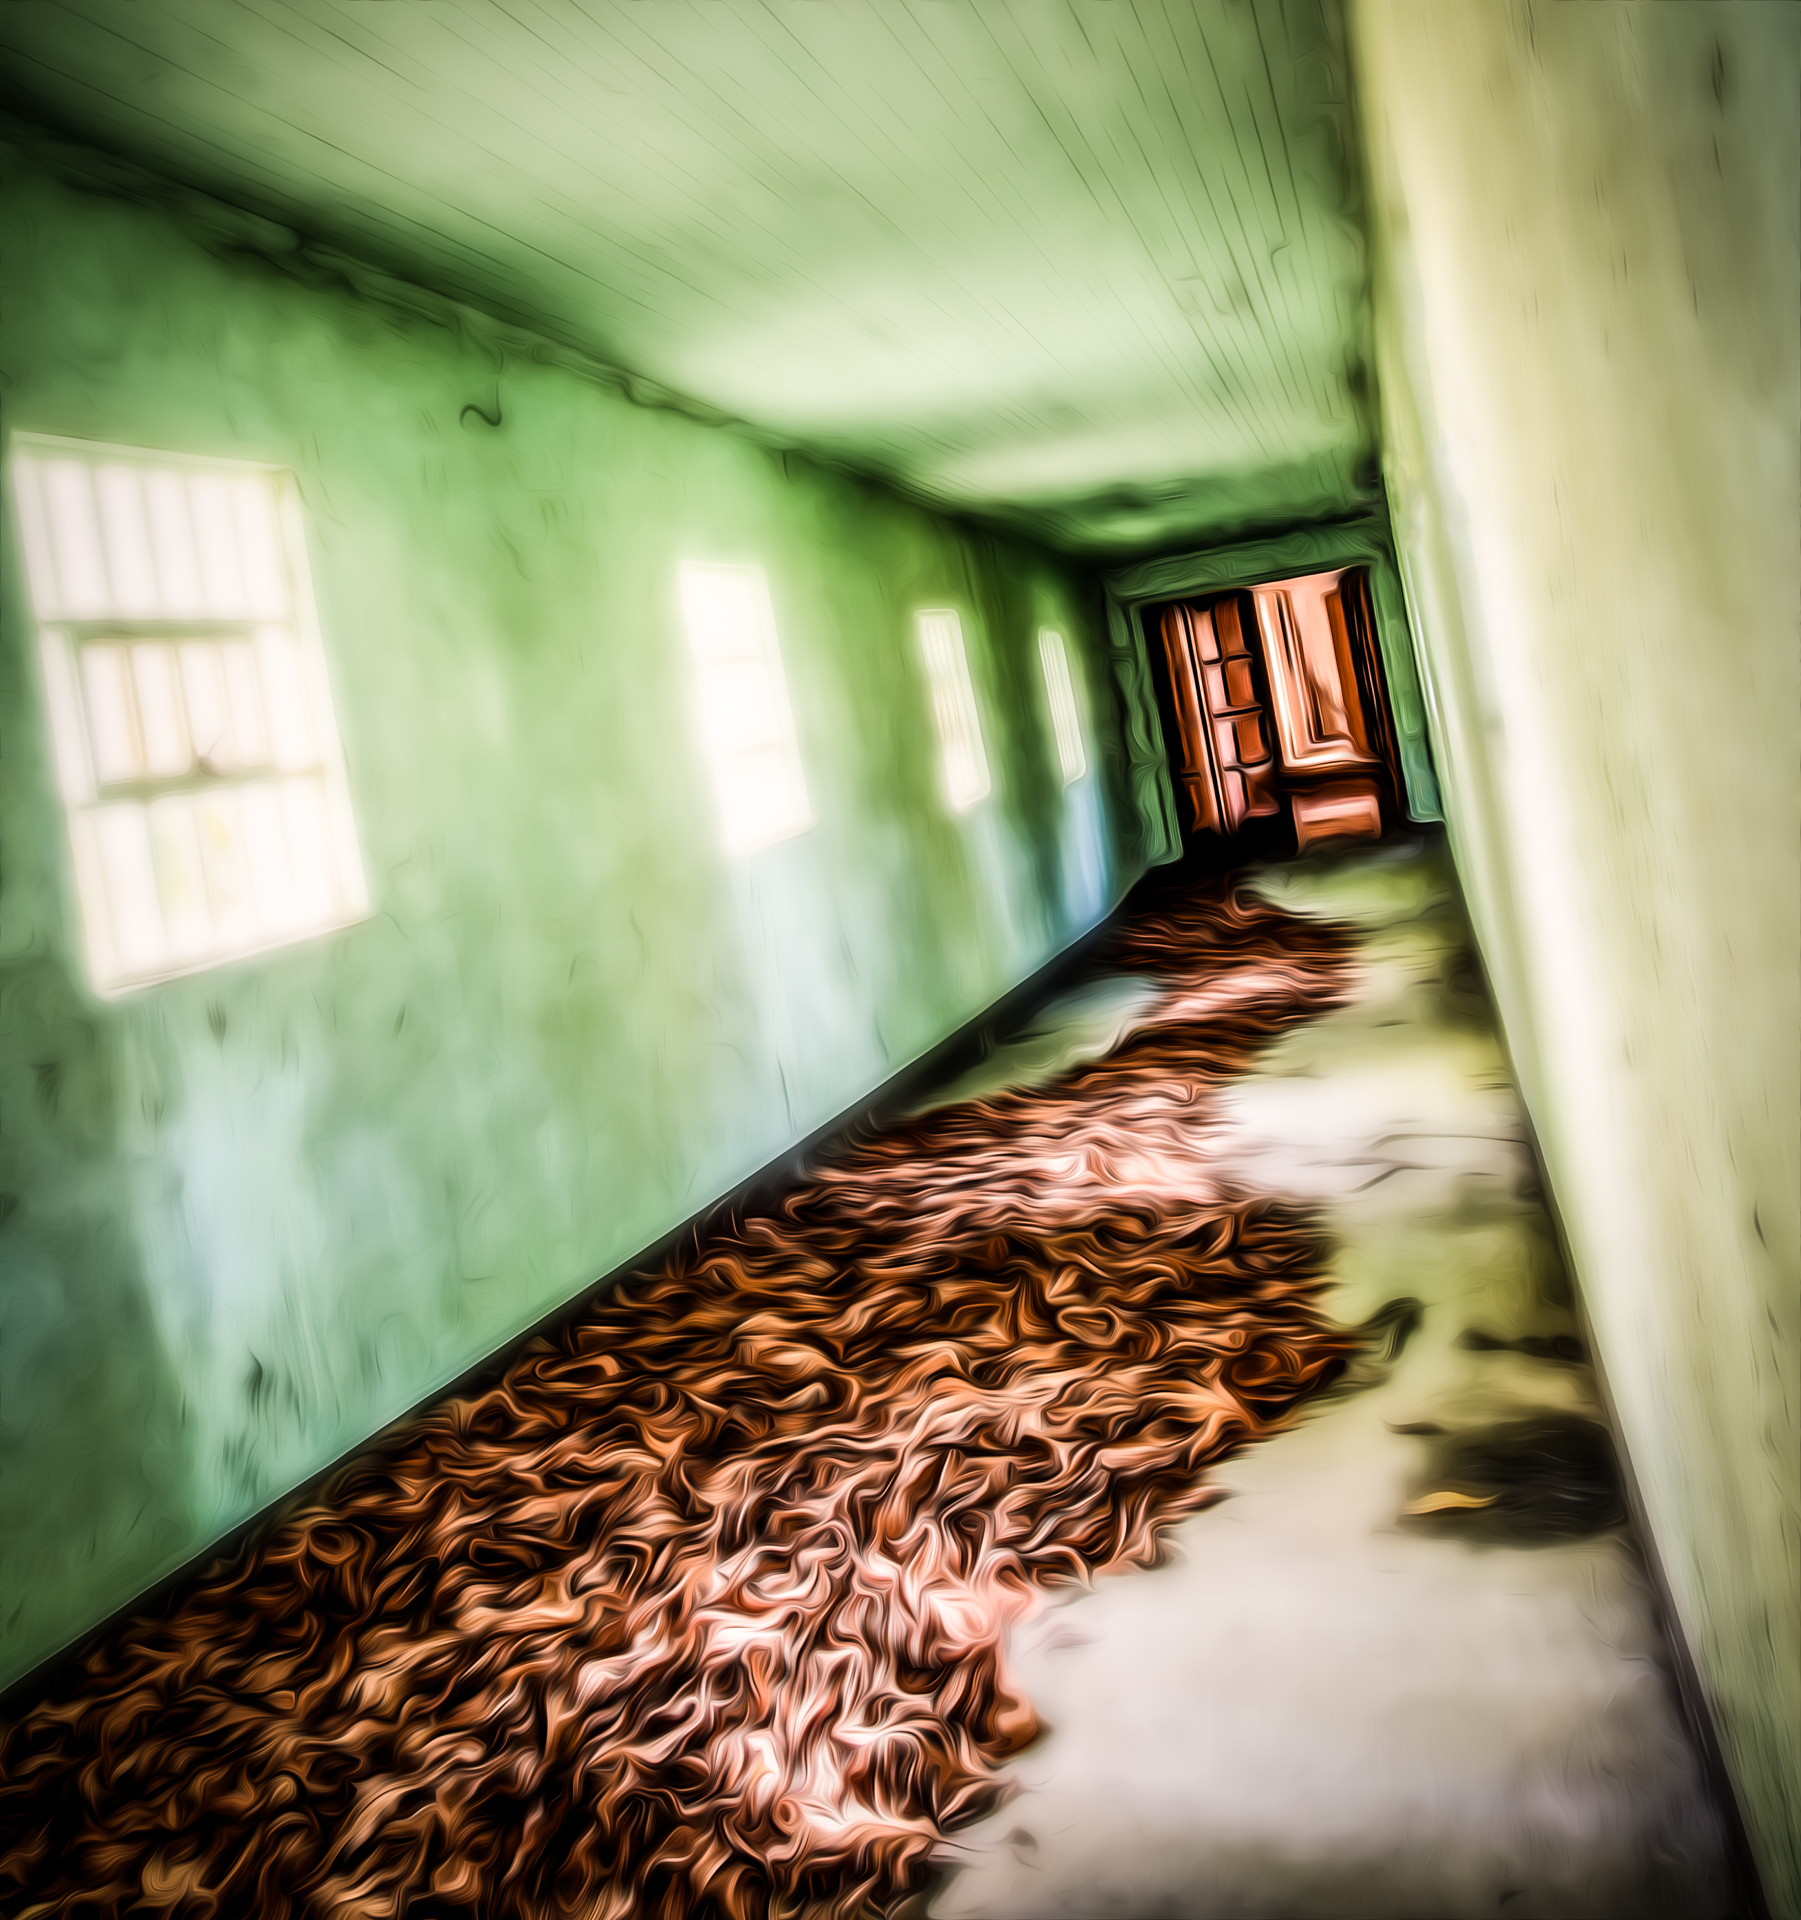 Erie dreamy tilted photo down a hallway at insane asylum Sedro Woolley